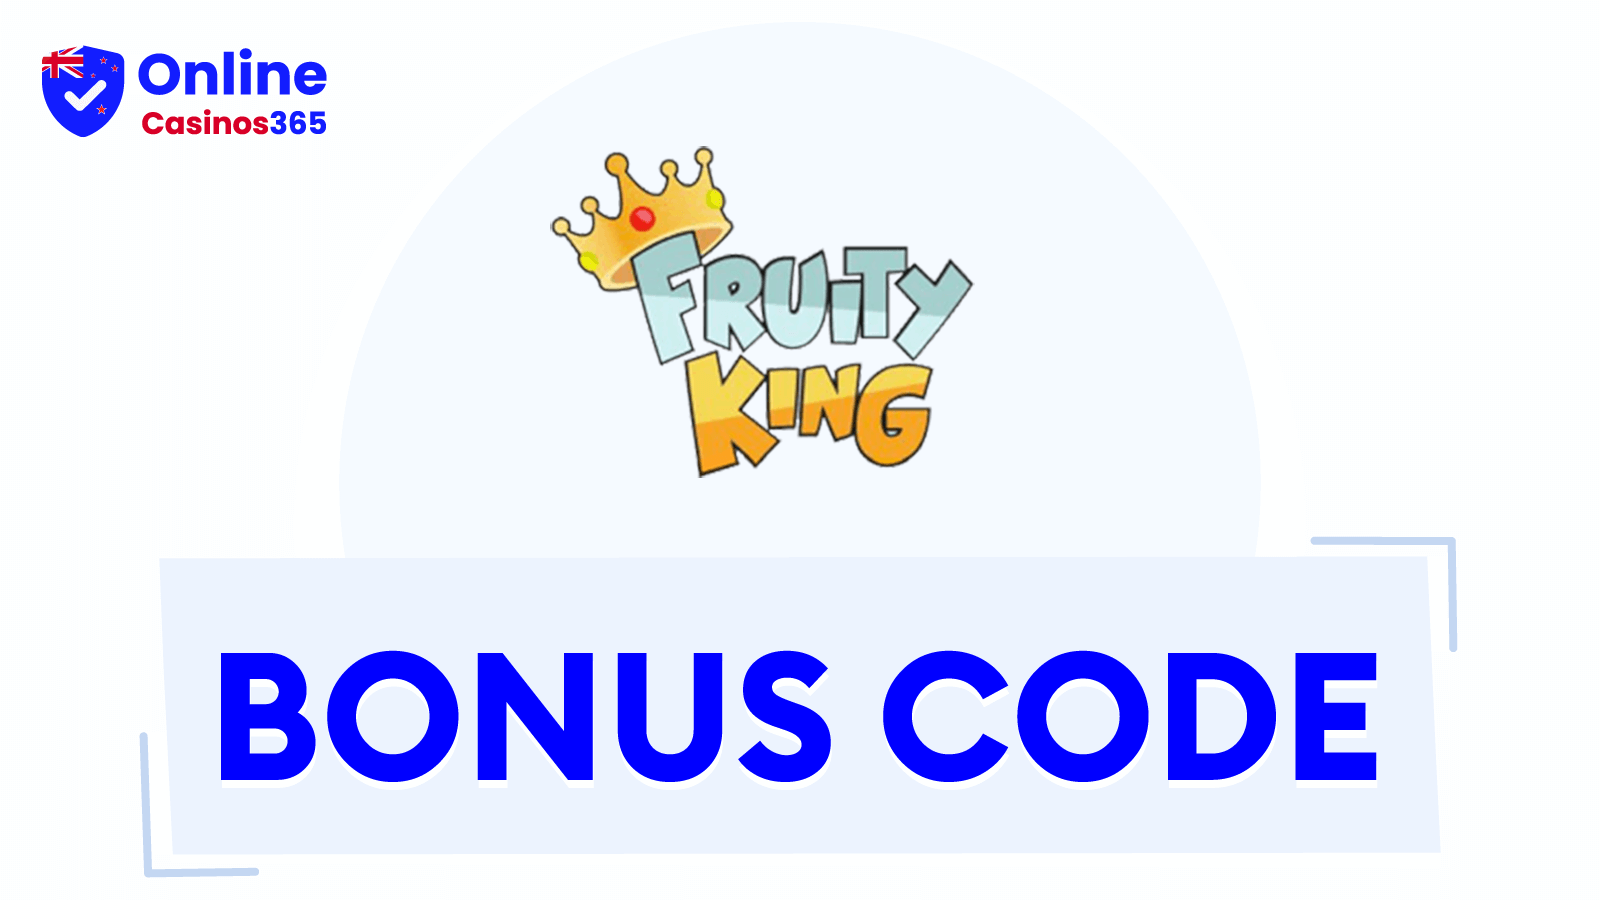 Fruity King Casino Bonus Codes